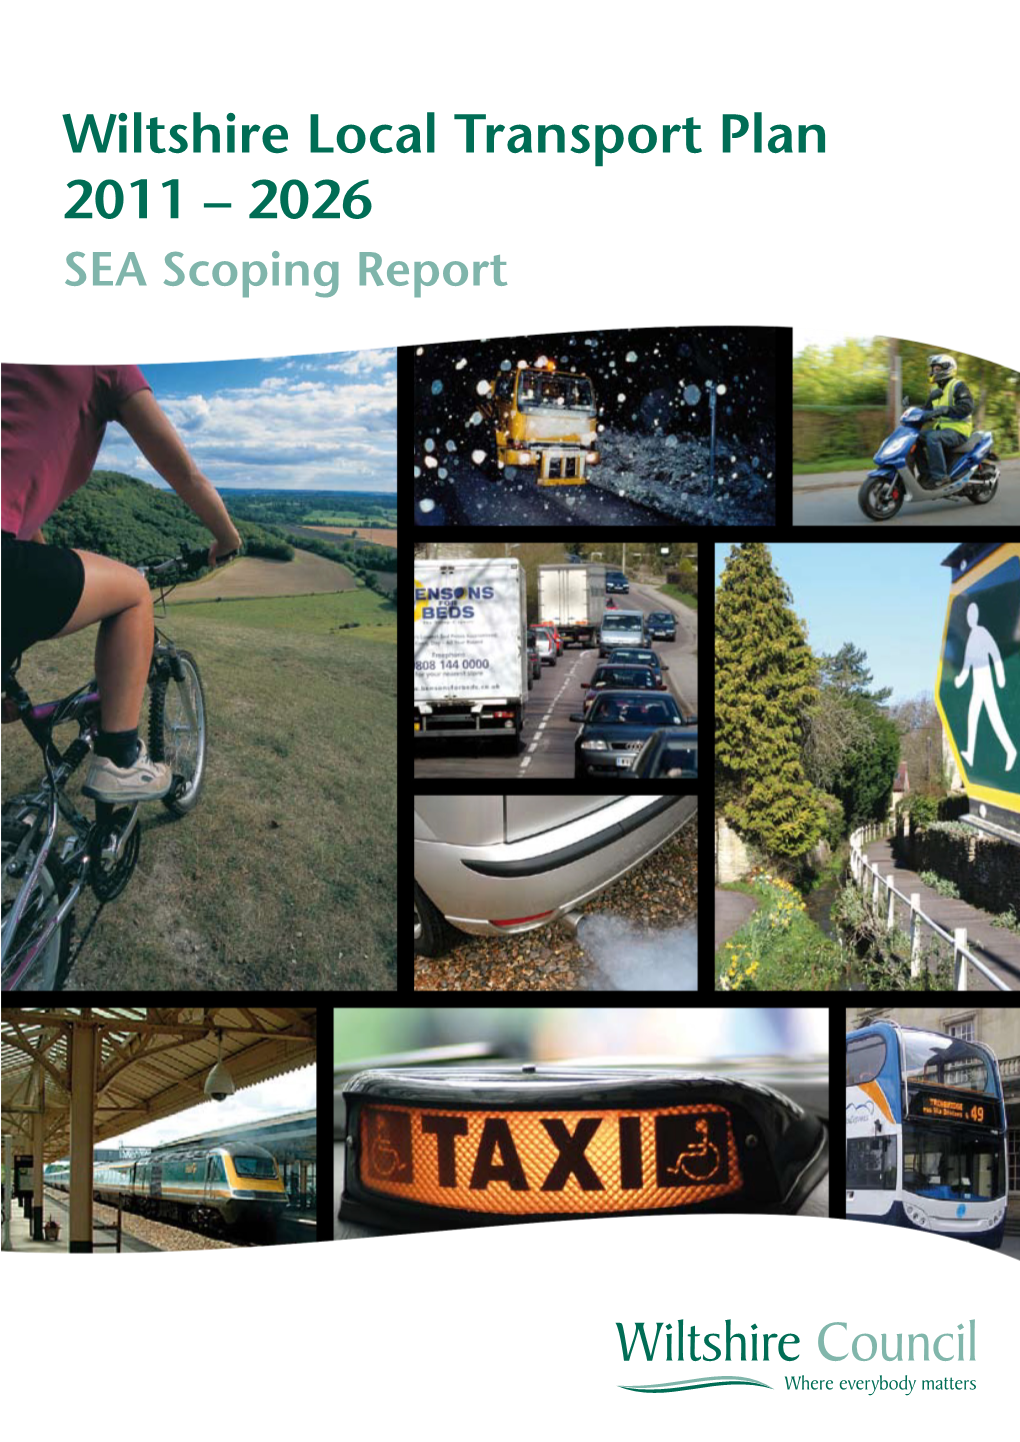 SEA Scoping Report